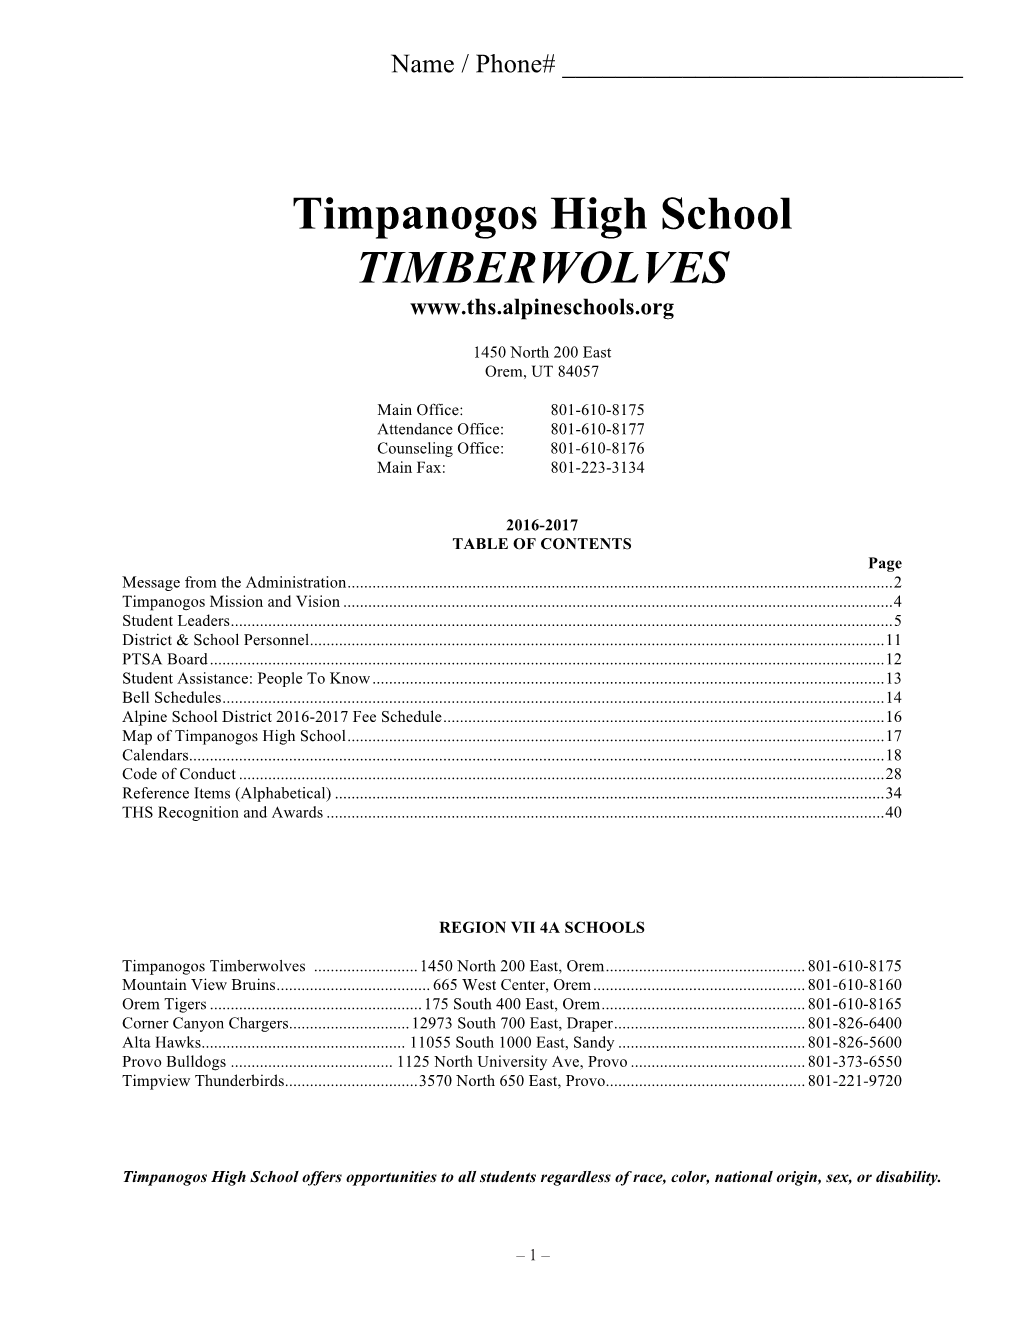 Timpanogos High School TIMBERWOLVES